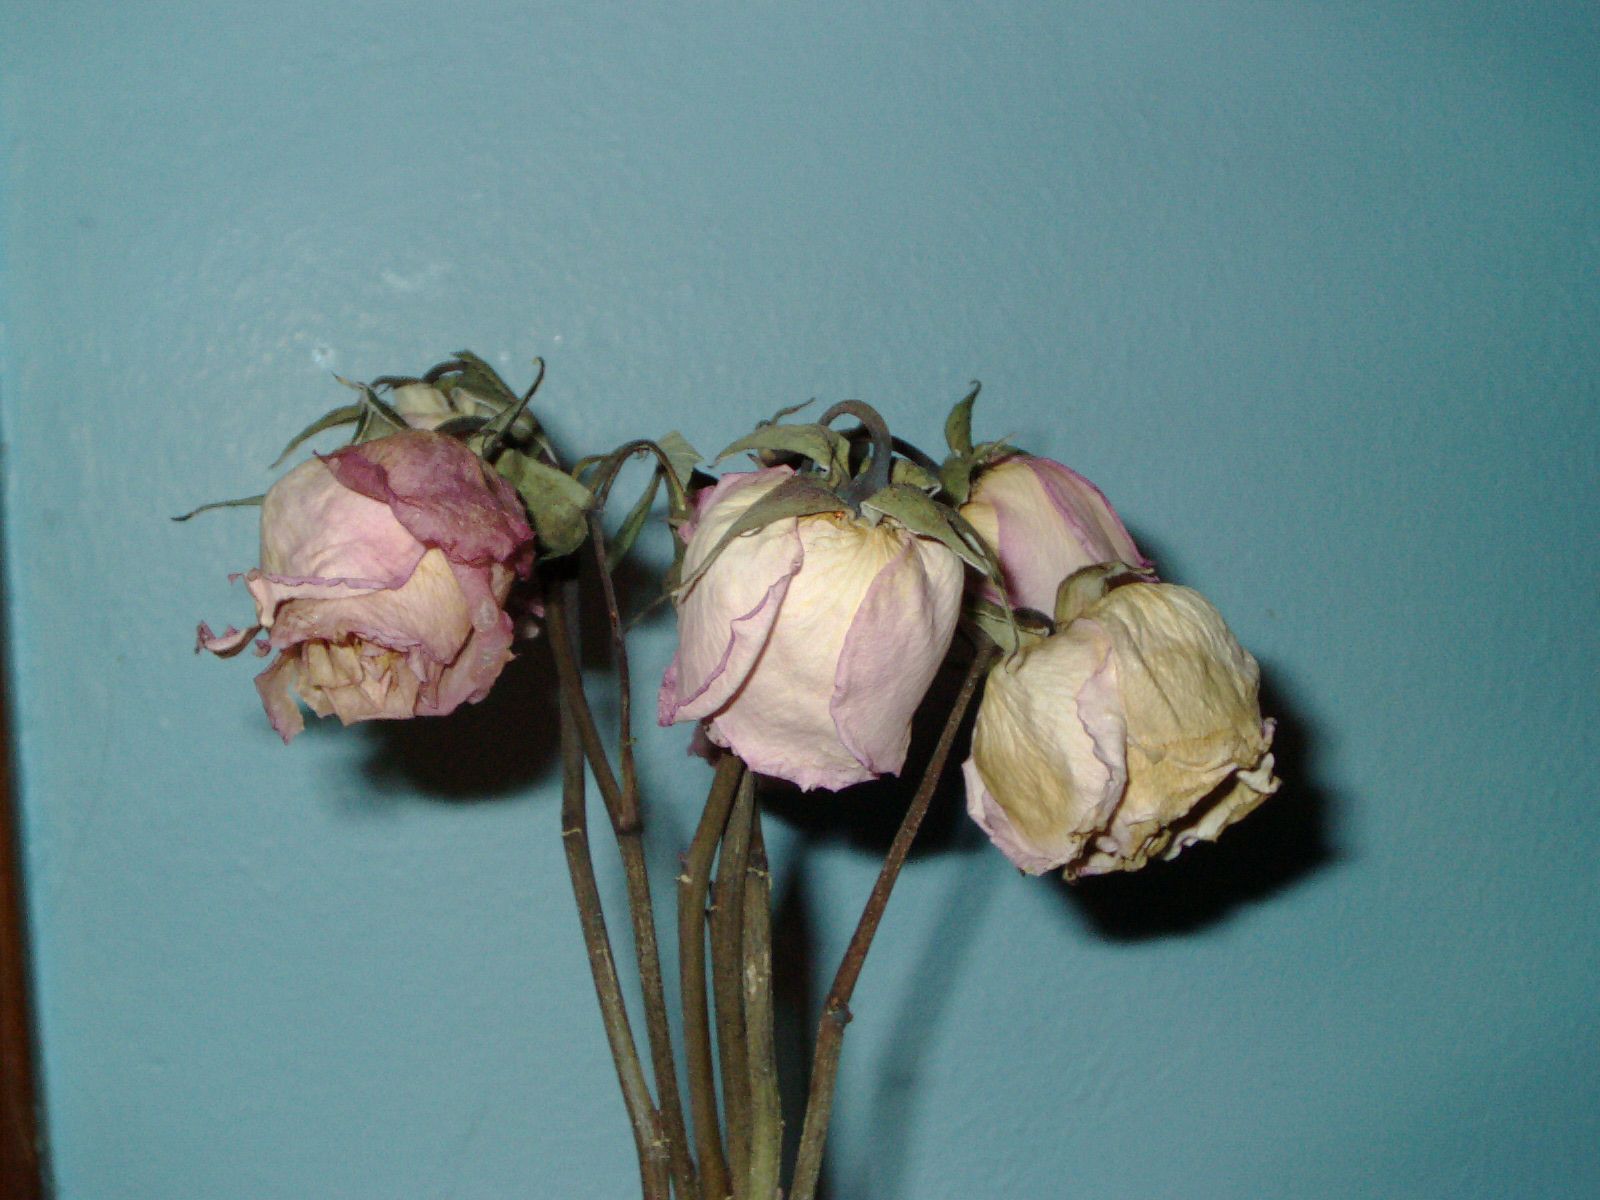 dead roses | Heart Broken | Pinterest | Heart breaks